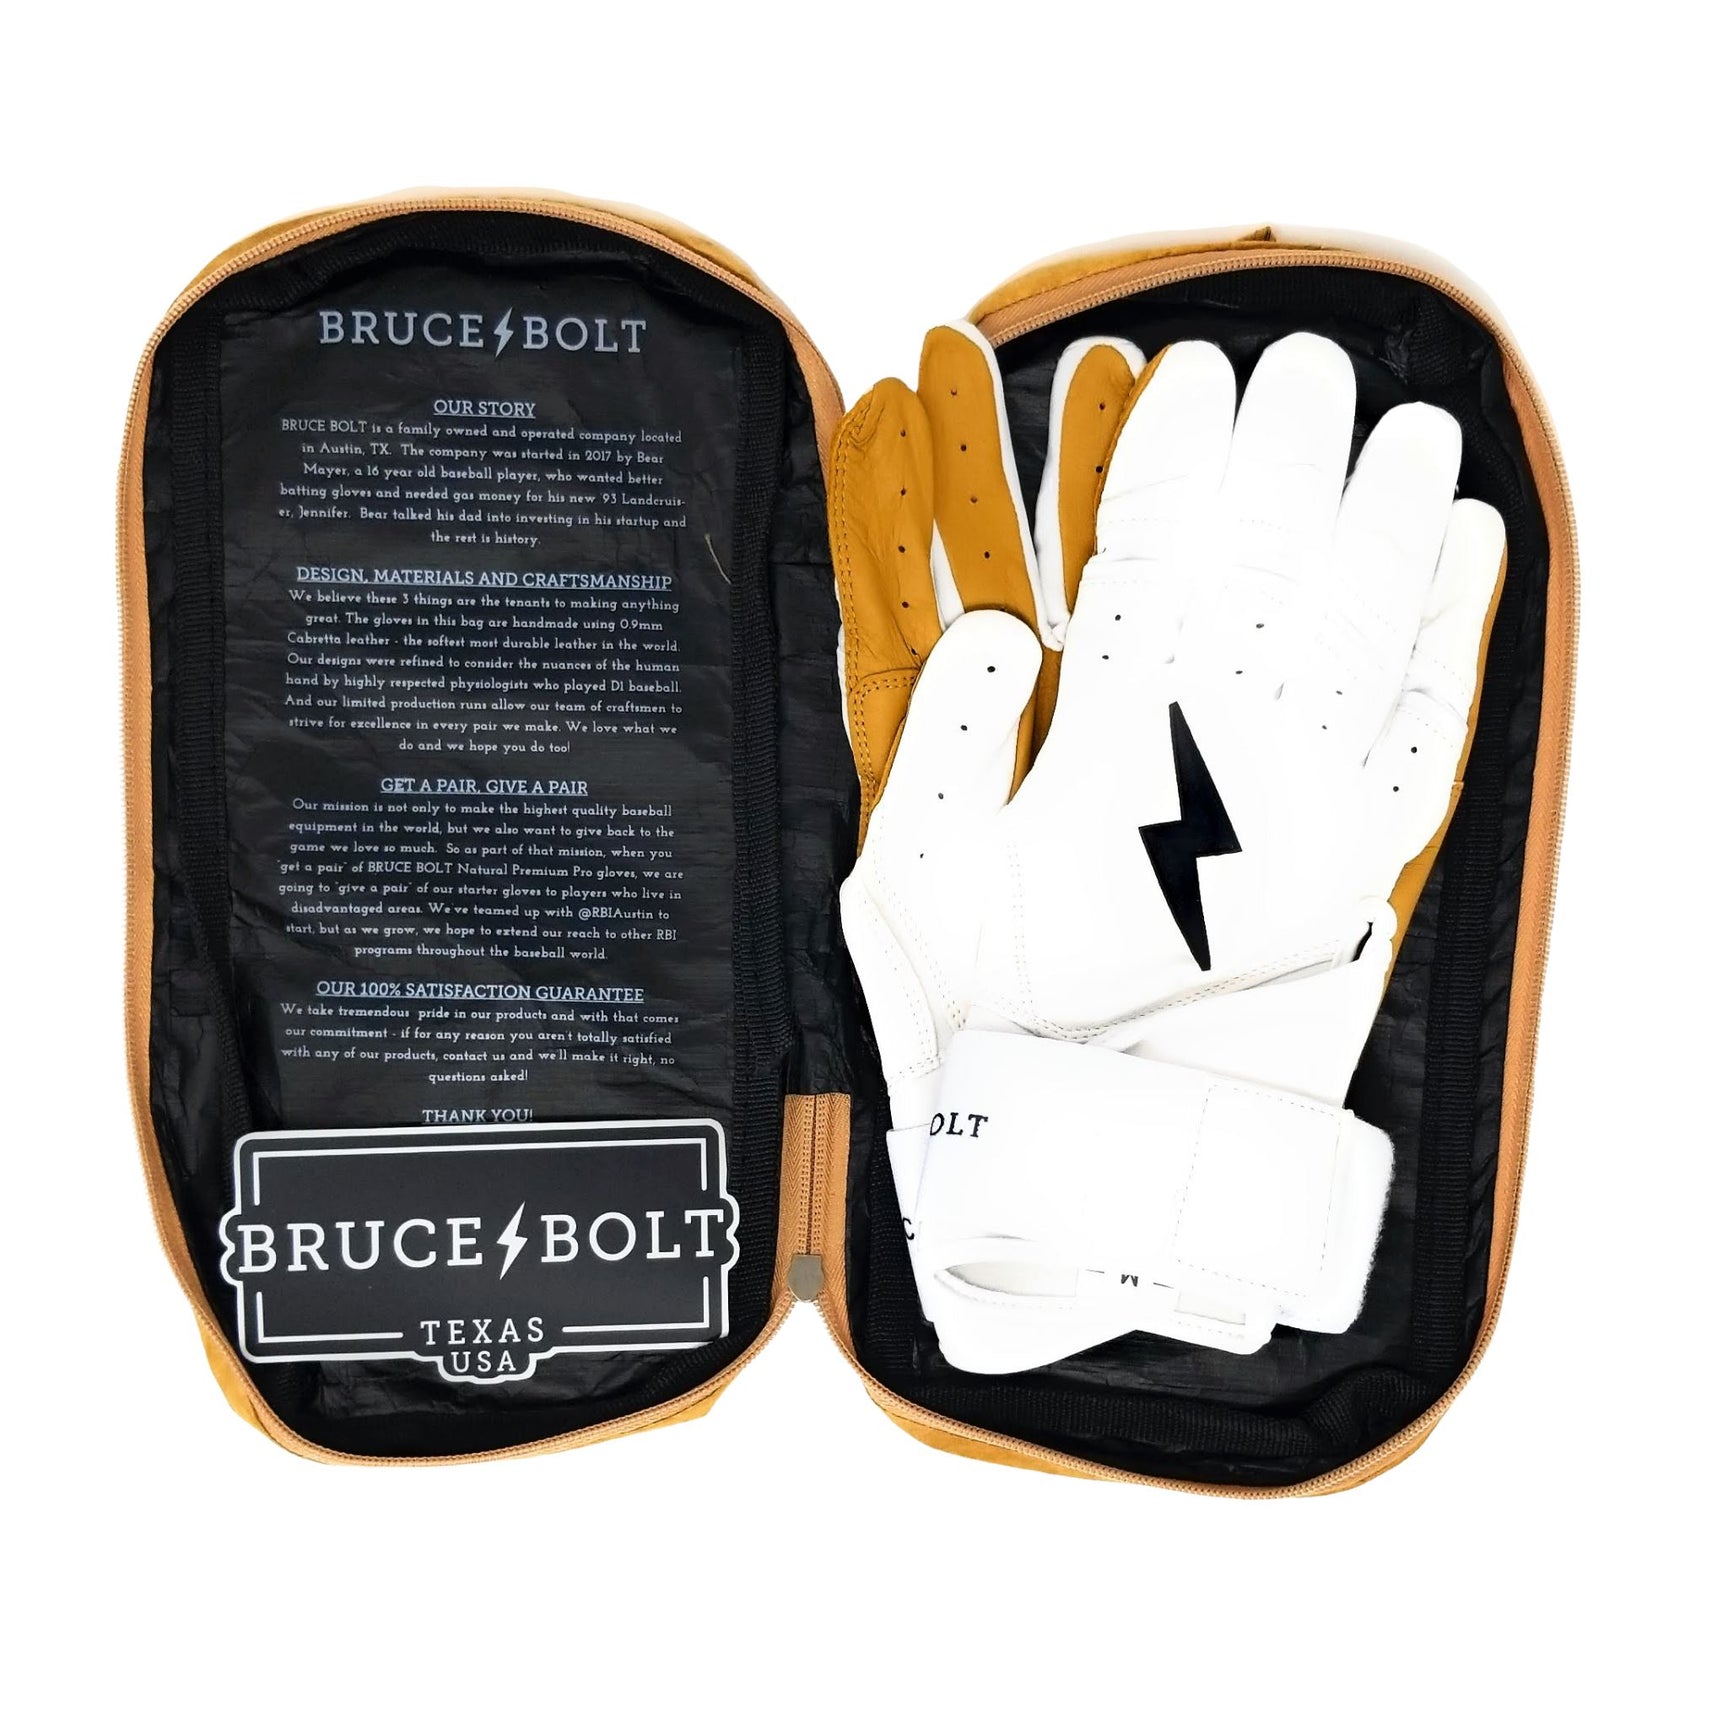 Bruce Bolt Youth Premium Pro Long Cuff Batting Gloves White